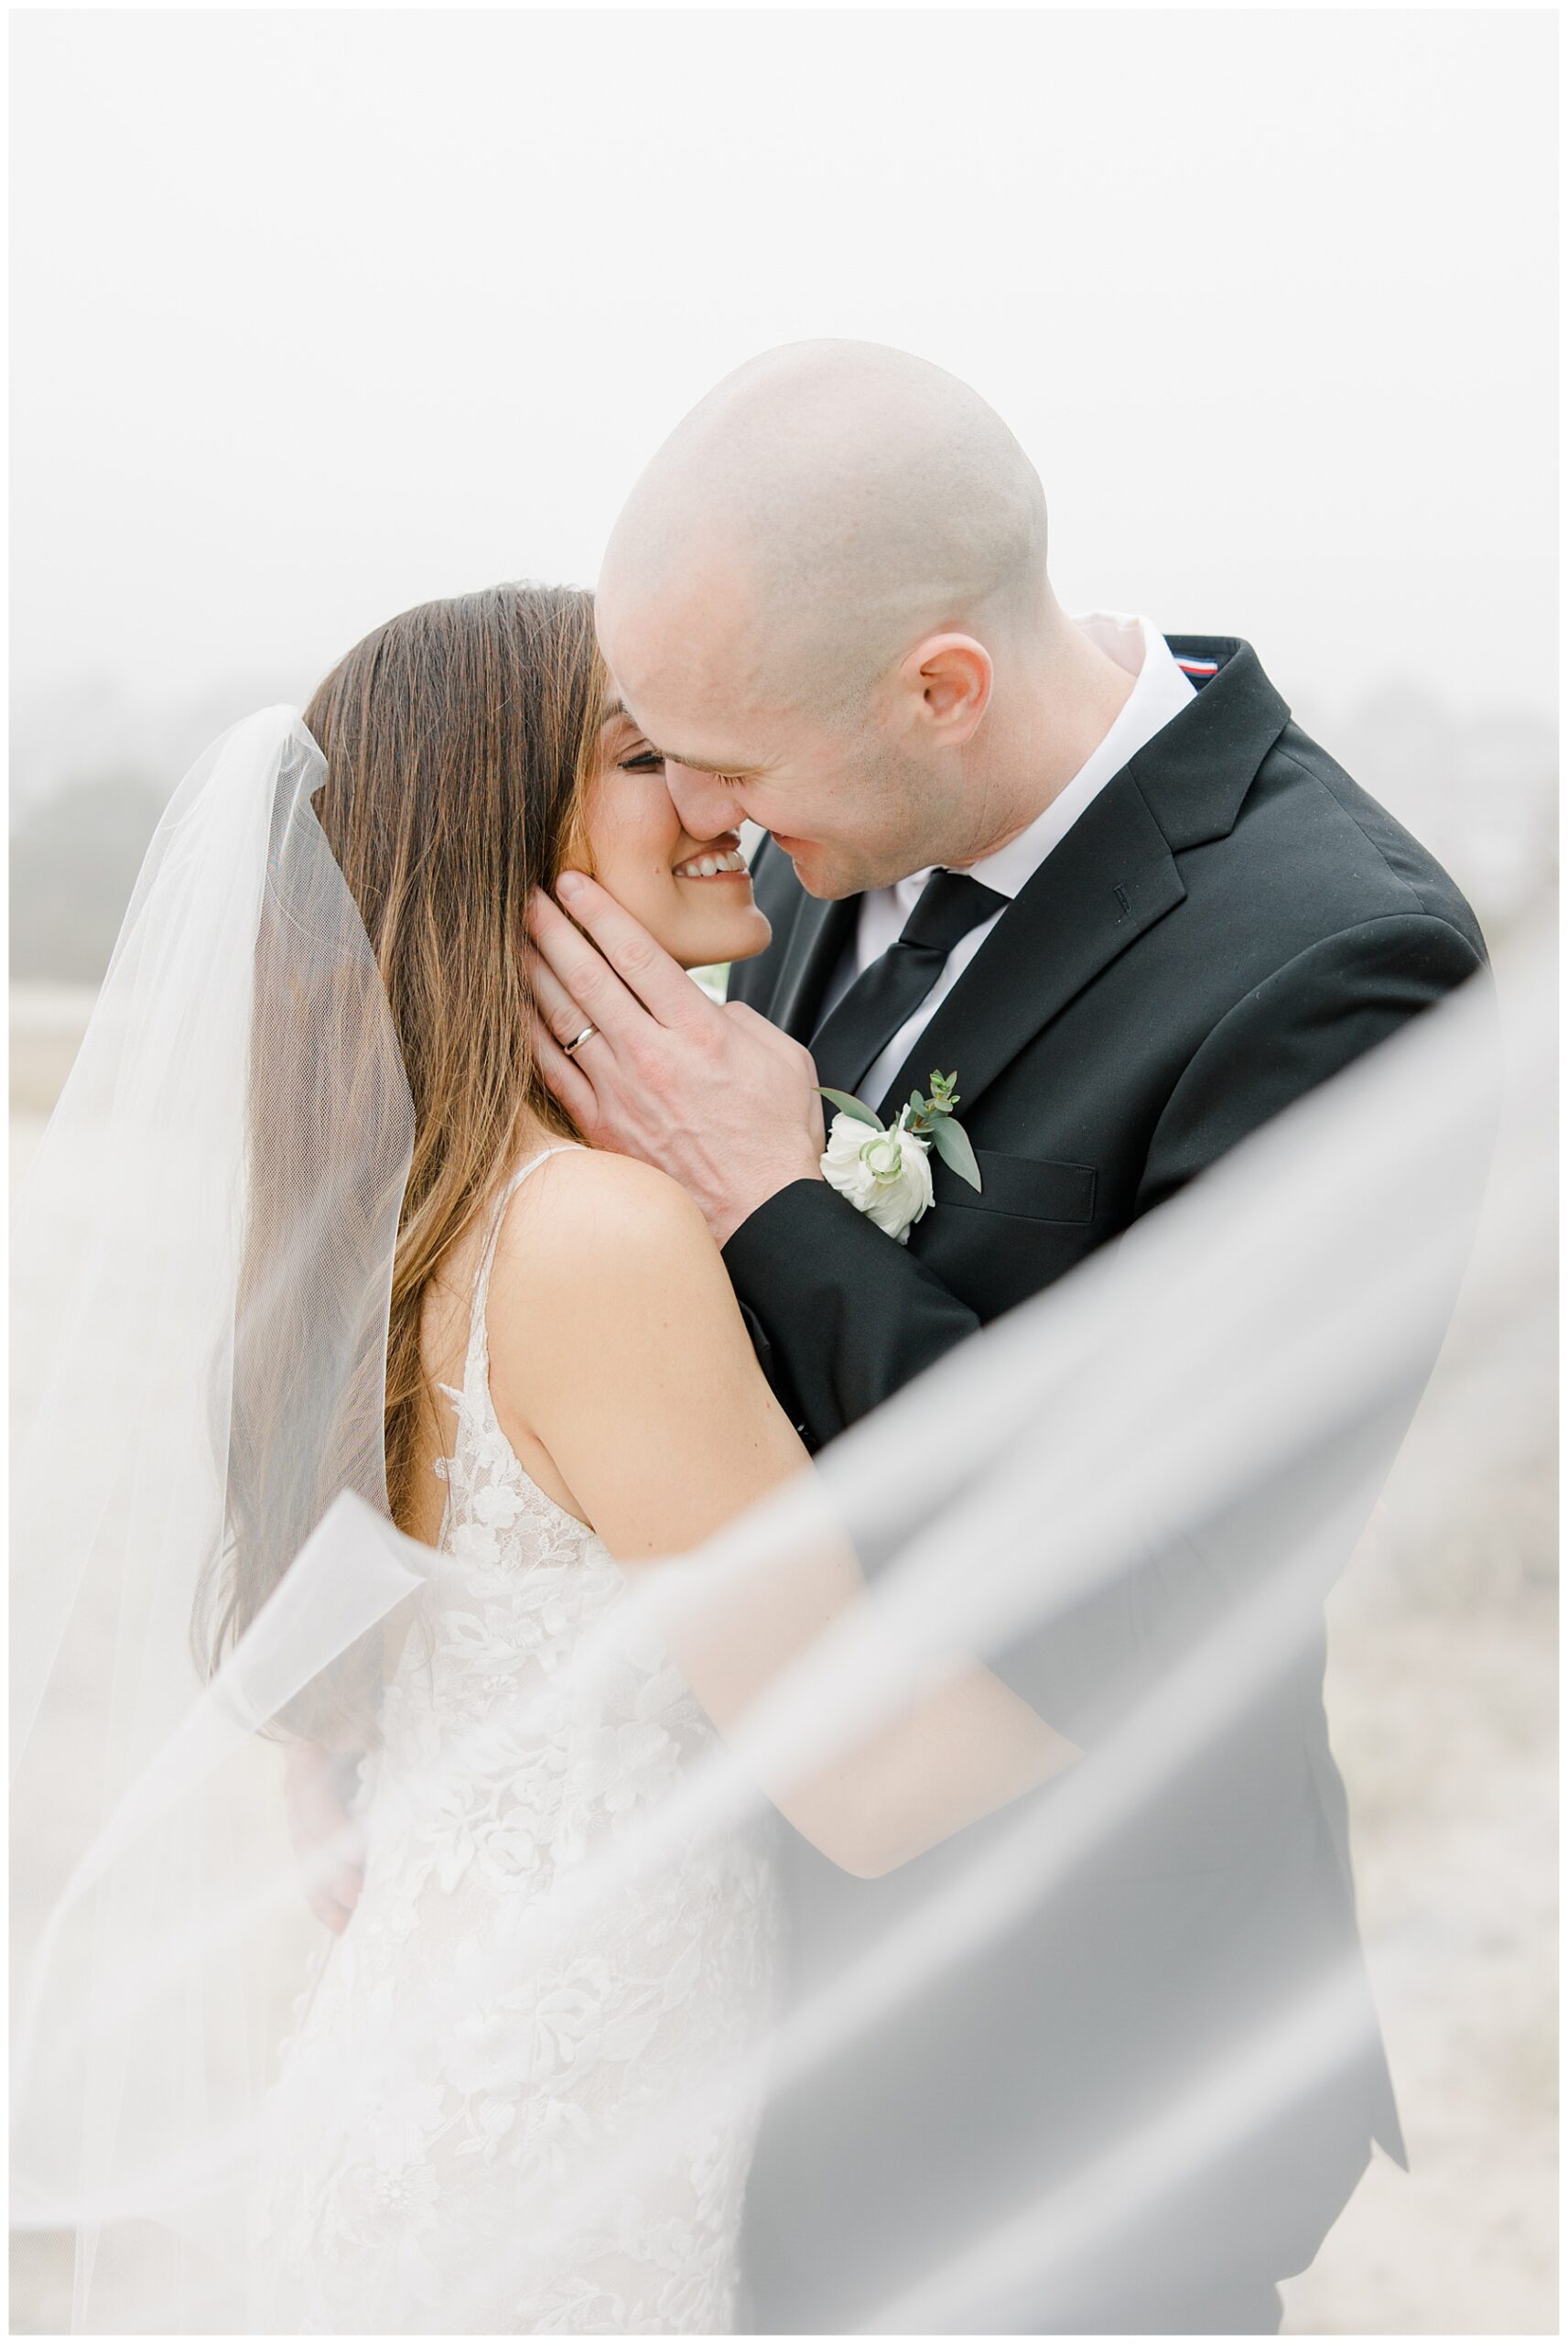 romantic wedding portraits photographed by Cape Cod wedding photographer Stephanie Berenson Photography